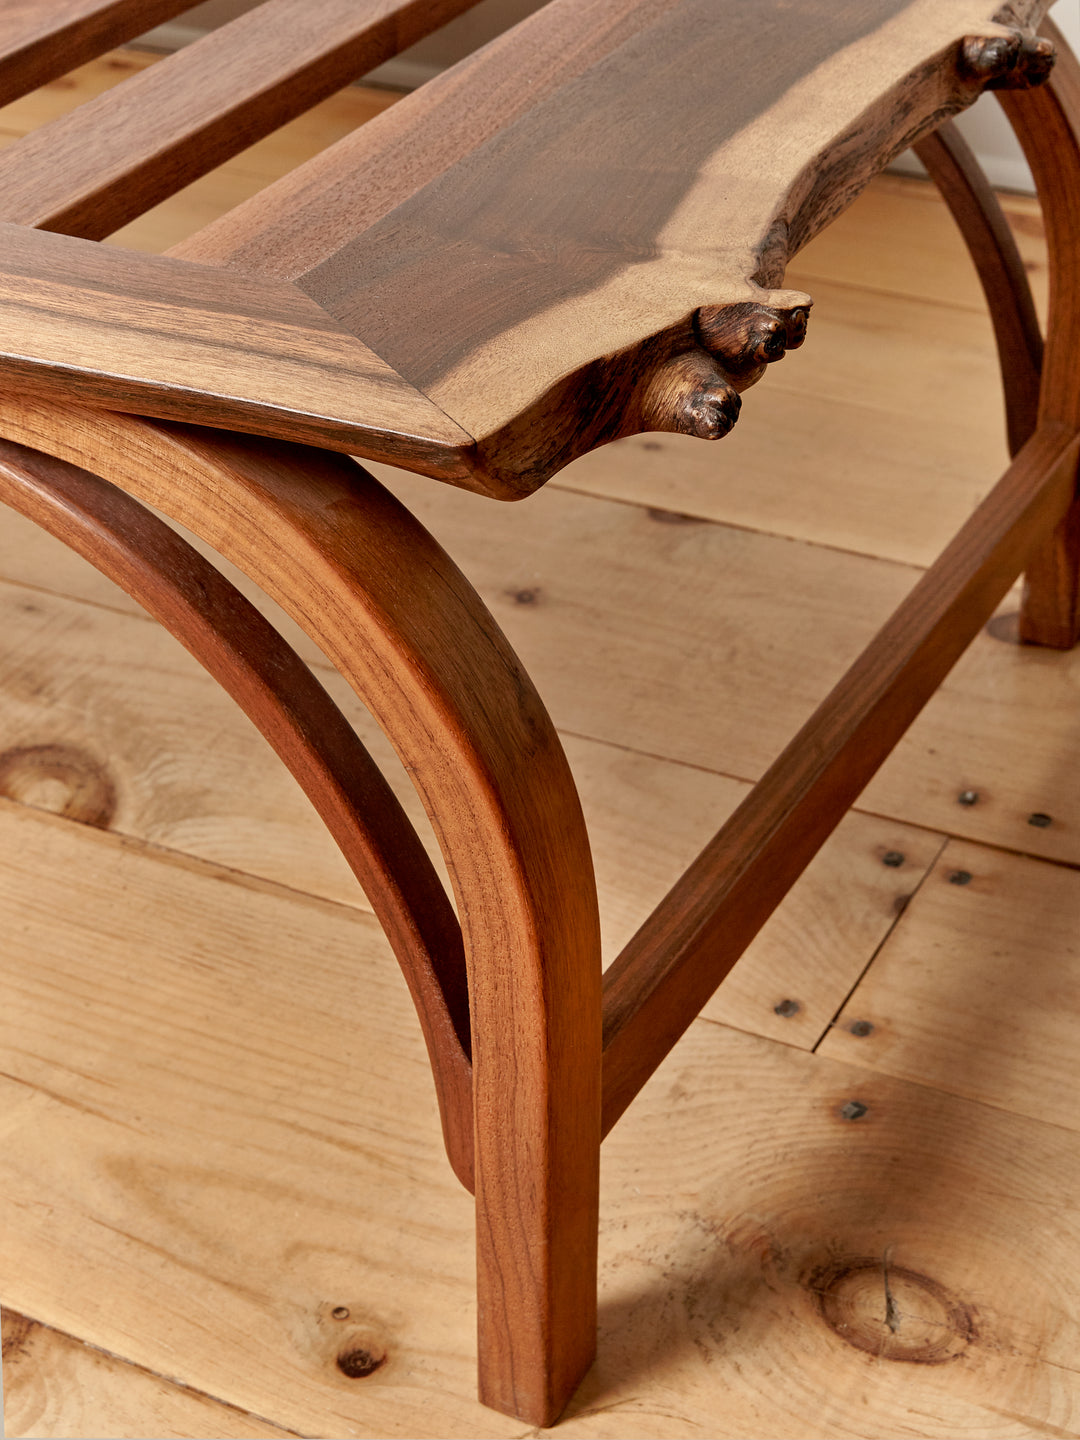 Bentleg Bench live edge claro walnut detail made to order custom furniture